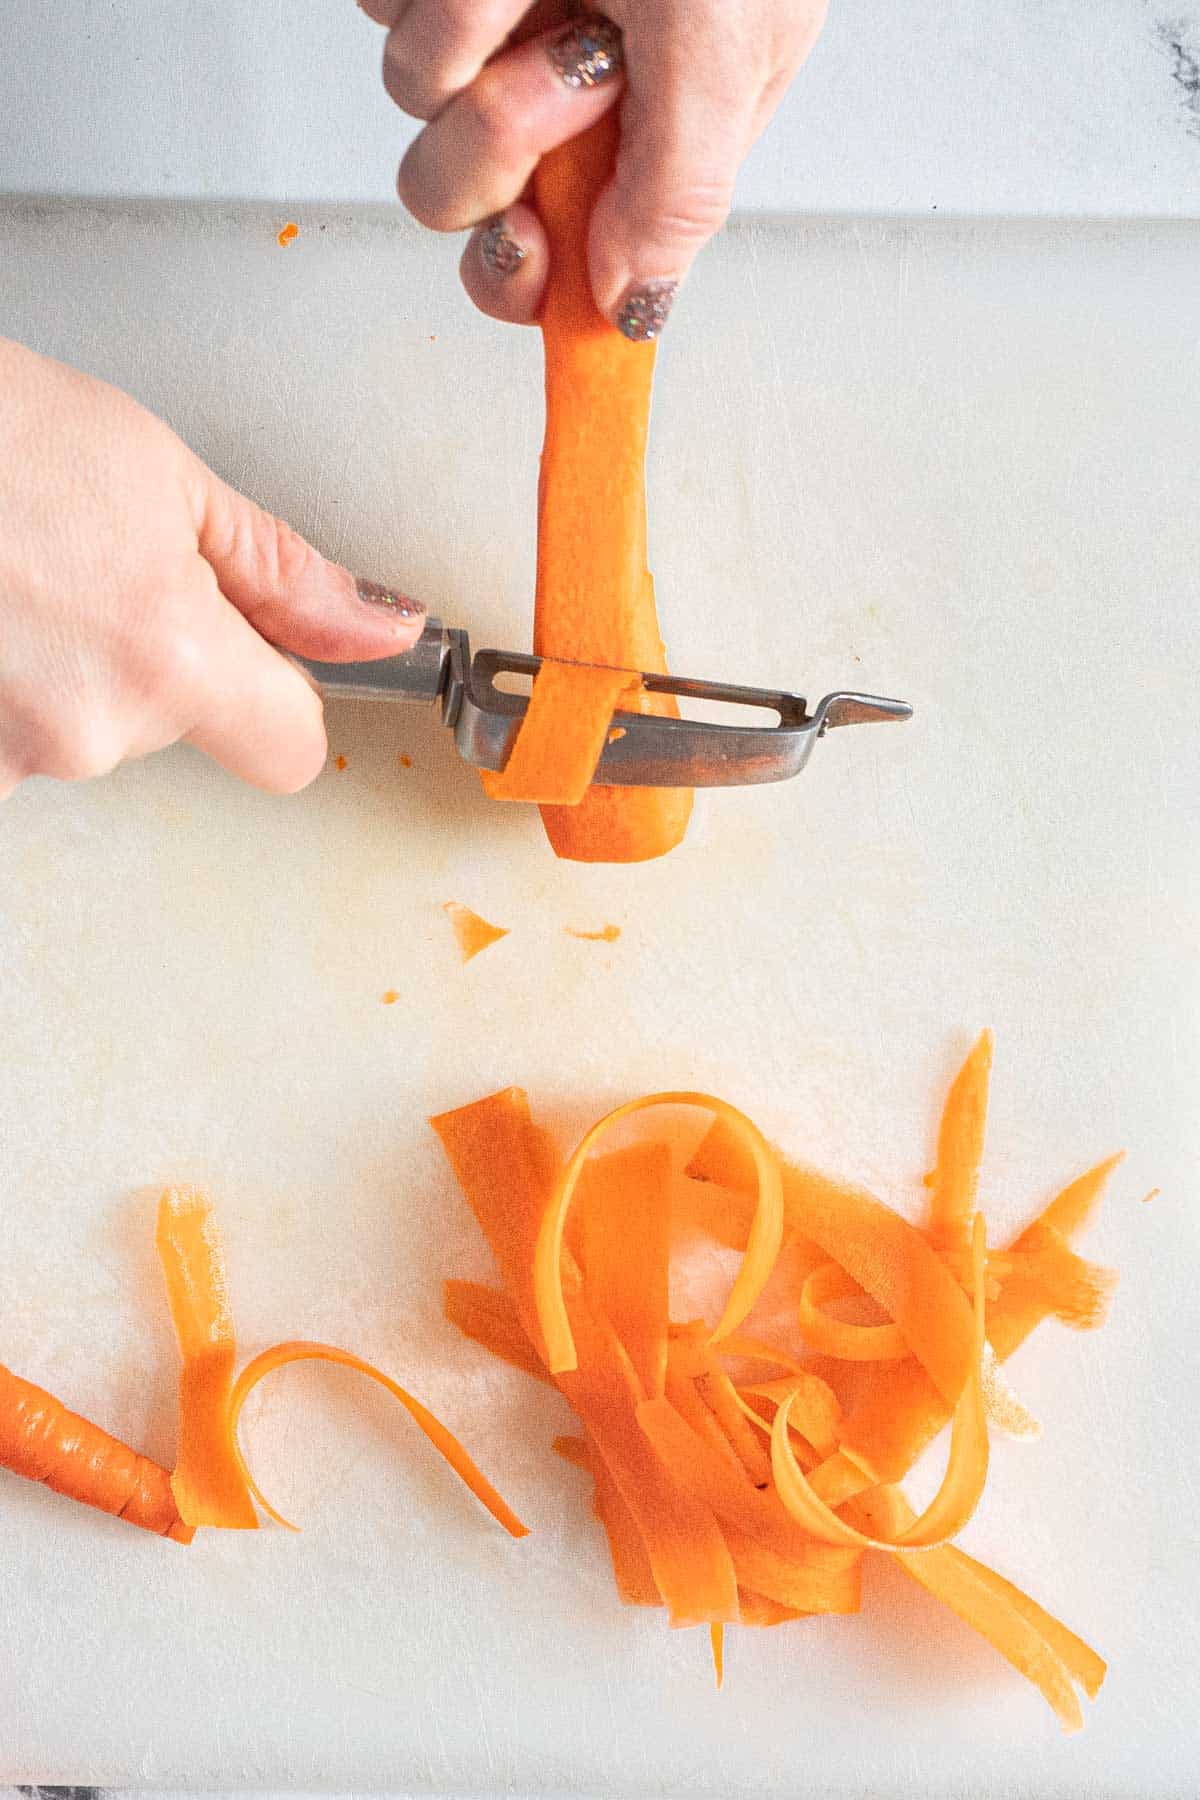 Using a vegetable peeler to make carrot ribbons.